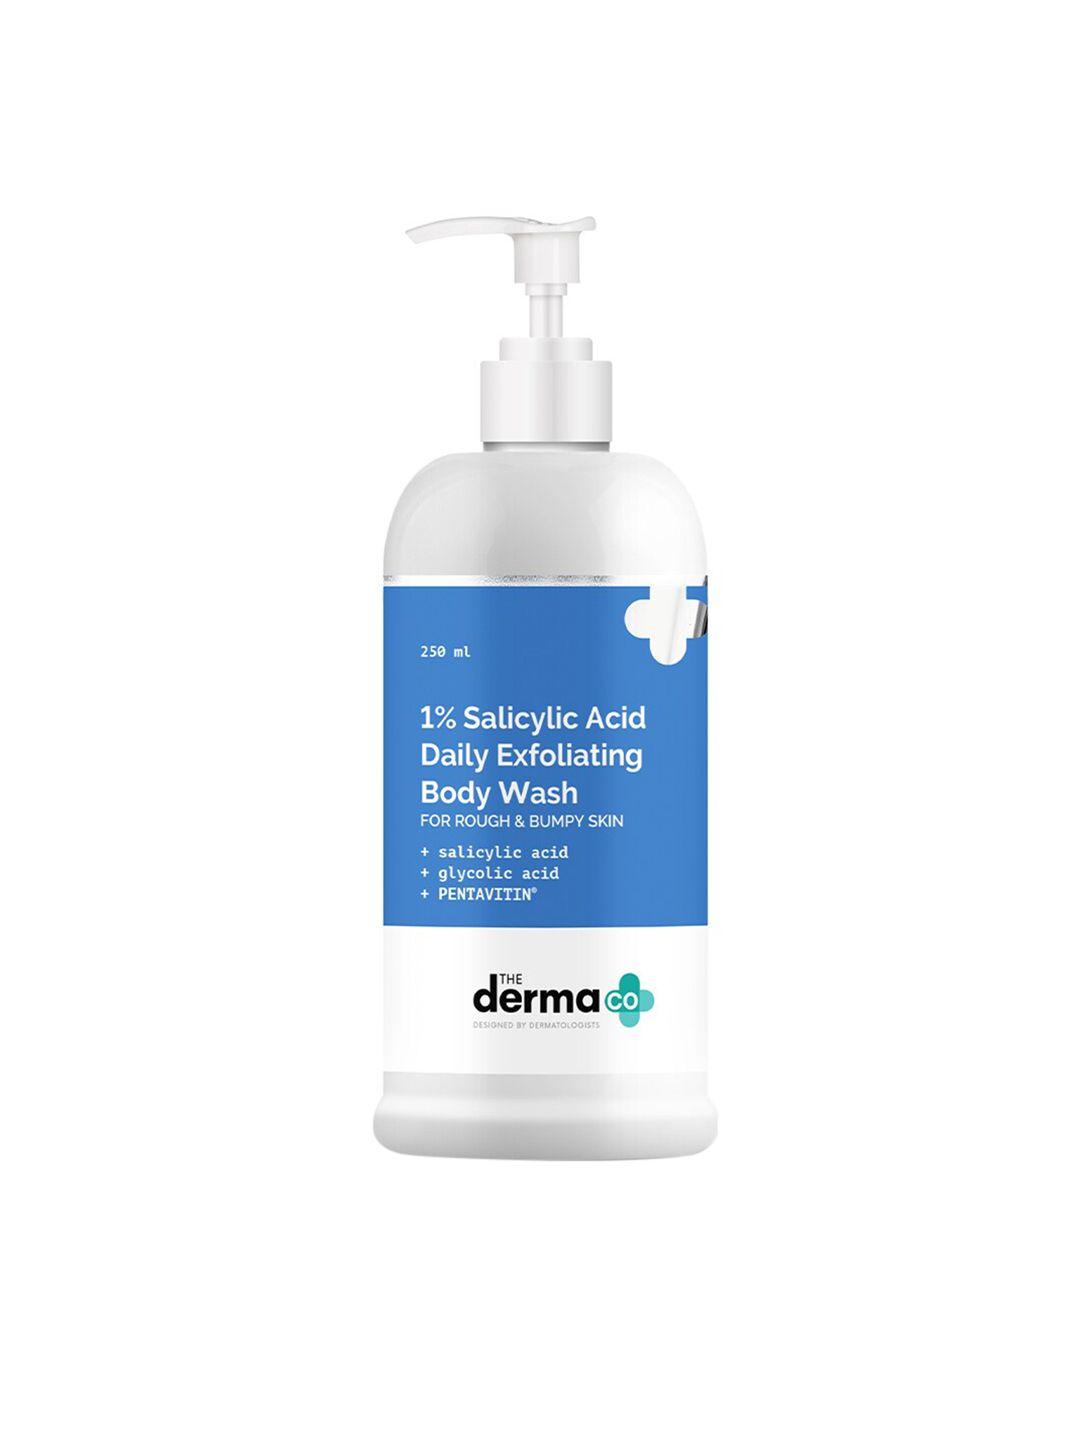 the derma co. 1% salicylic acid daily exfoliating body wash for rough & bumpy skin - 250ml